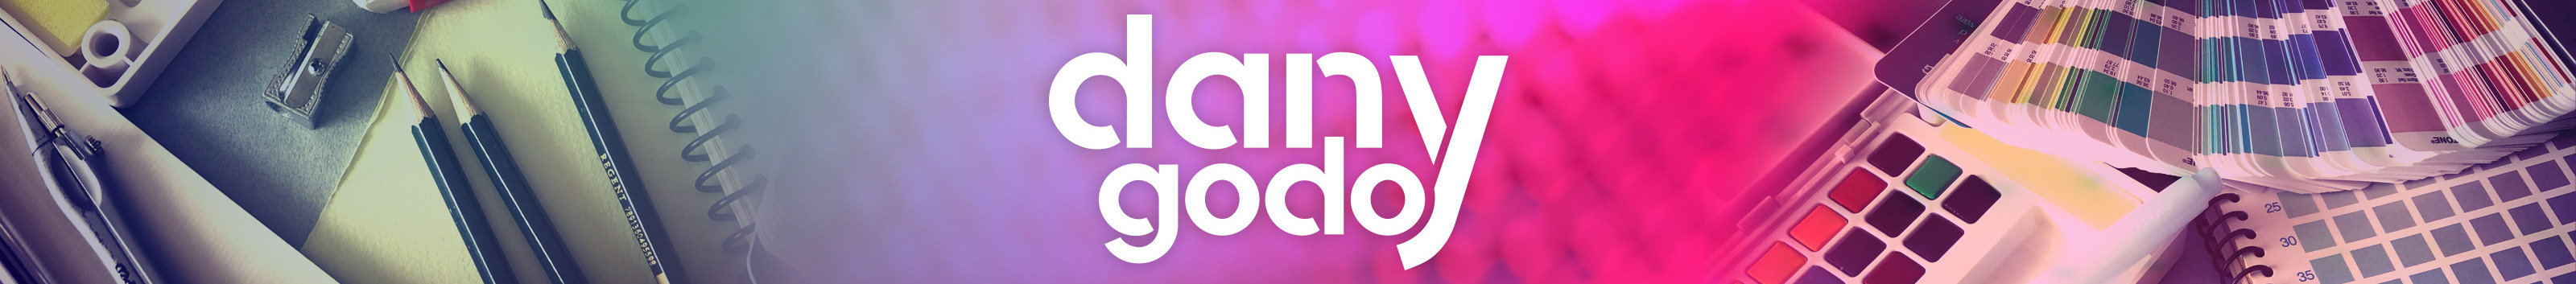 Daniela Godoy's profile banner